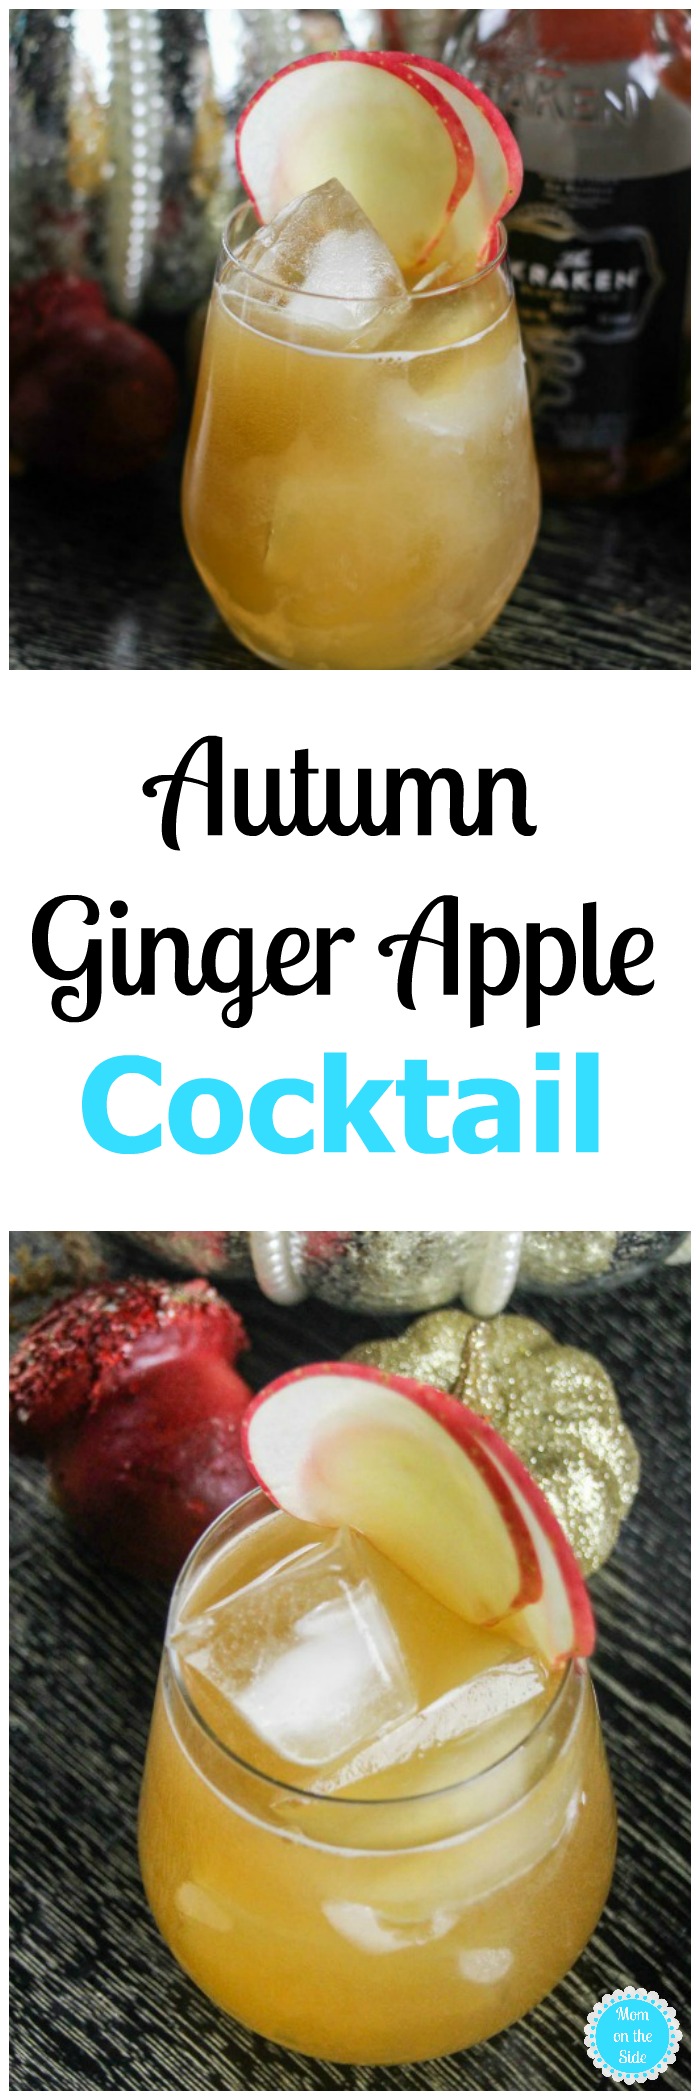 Autumn Ginger Apple Cocktail Recipe